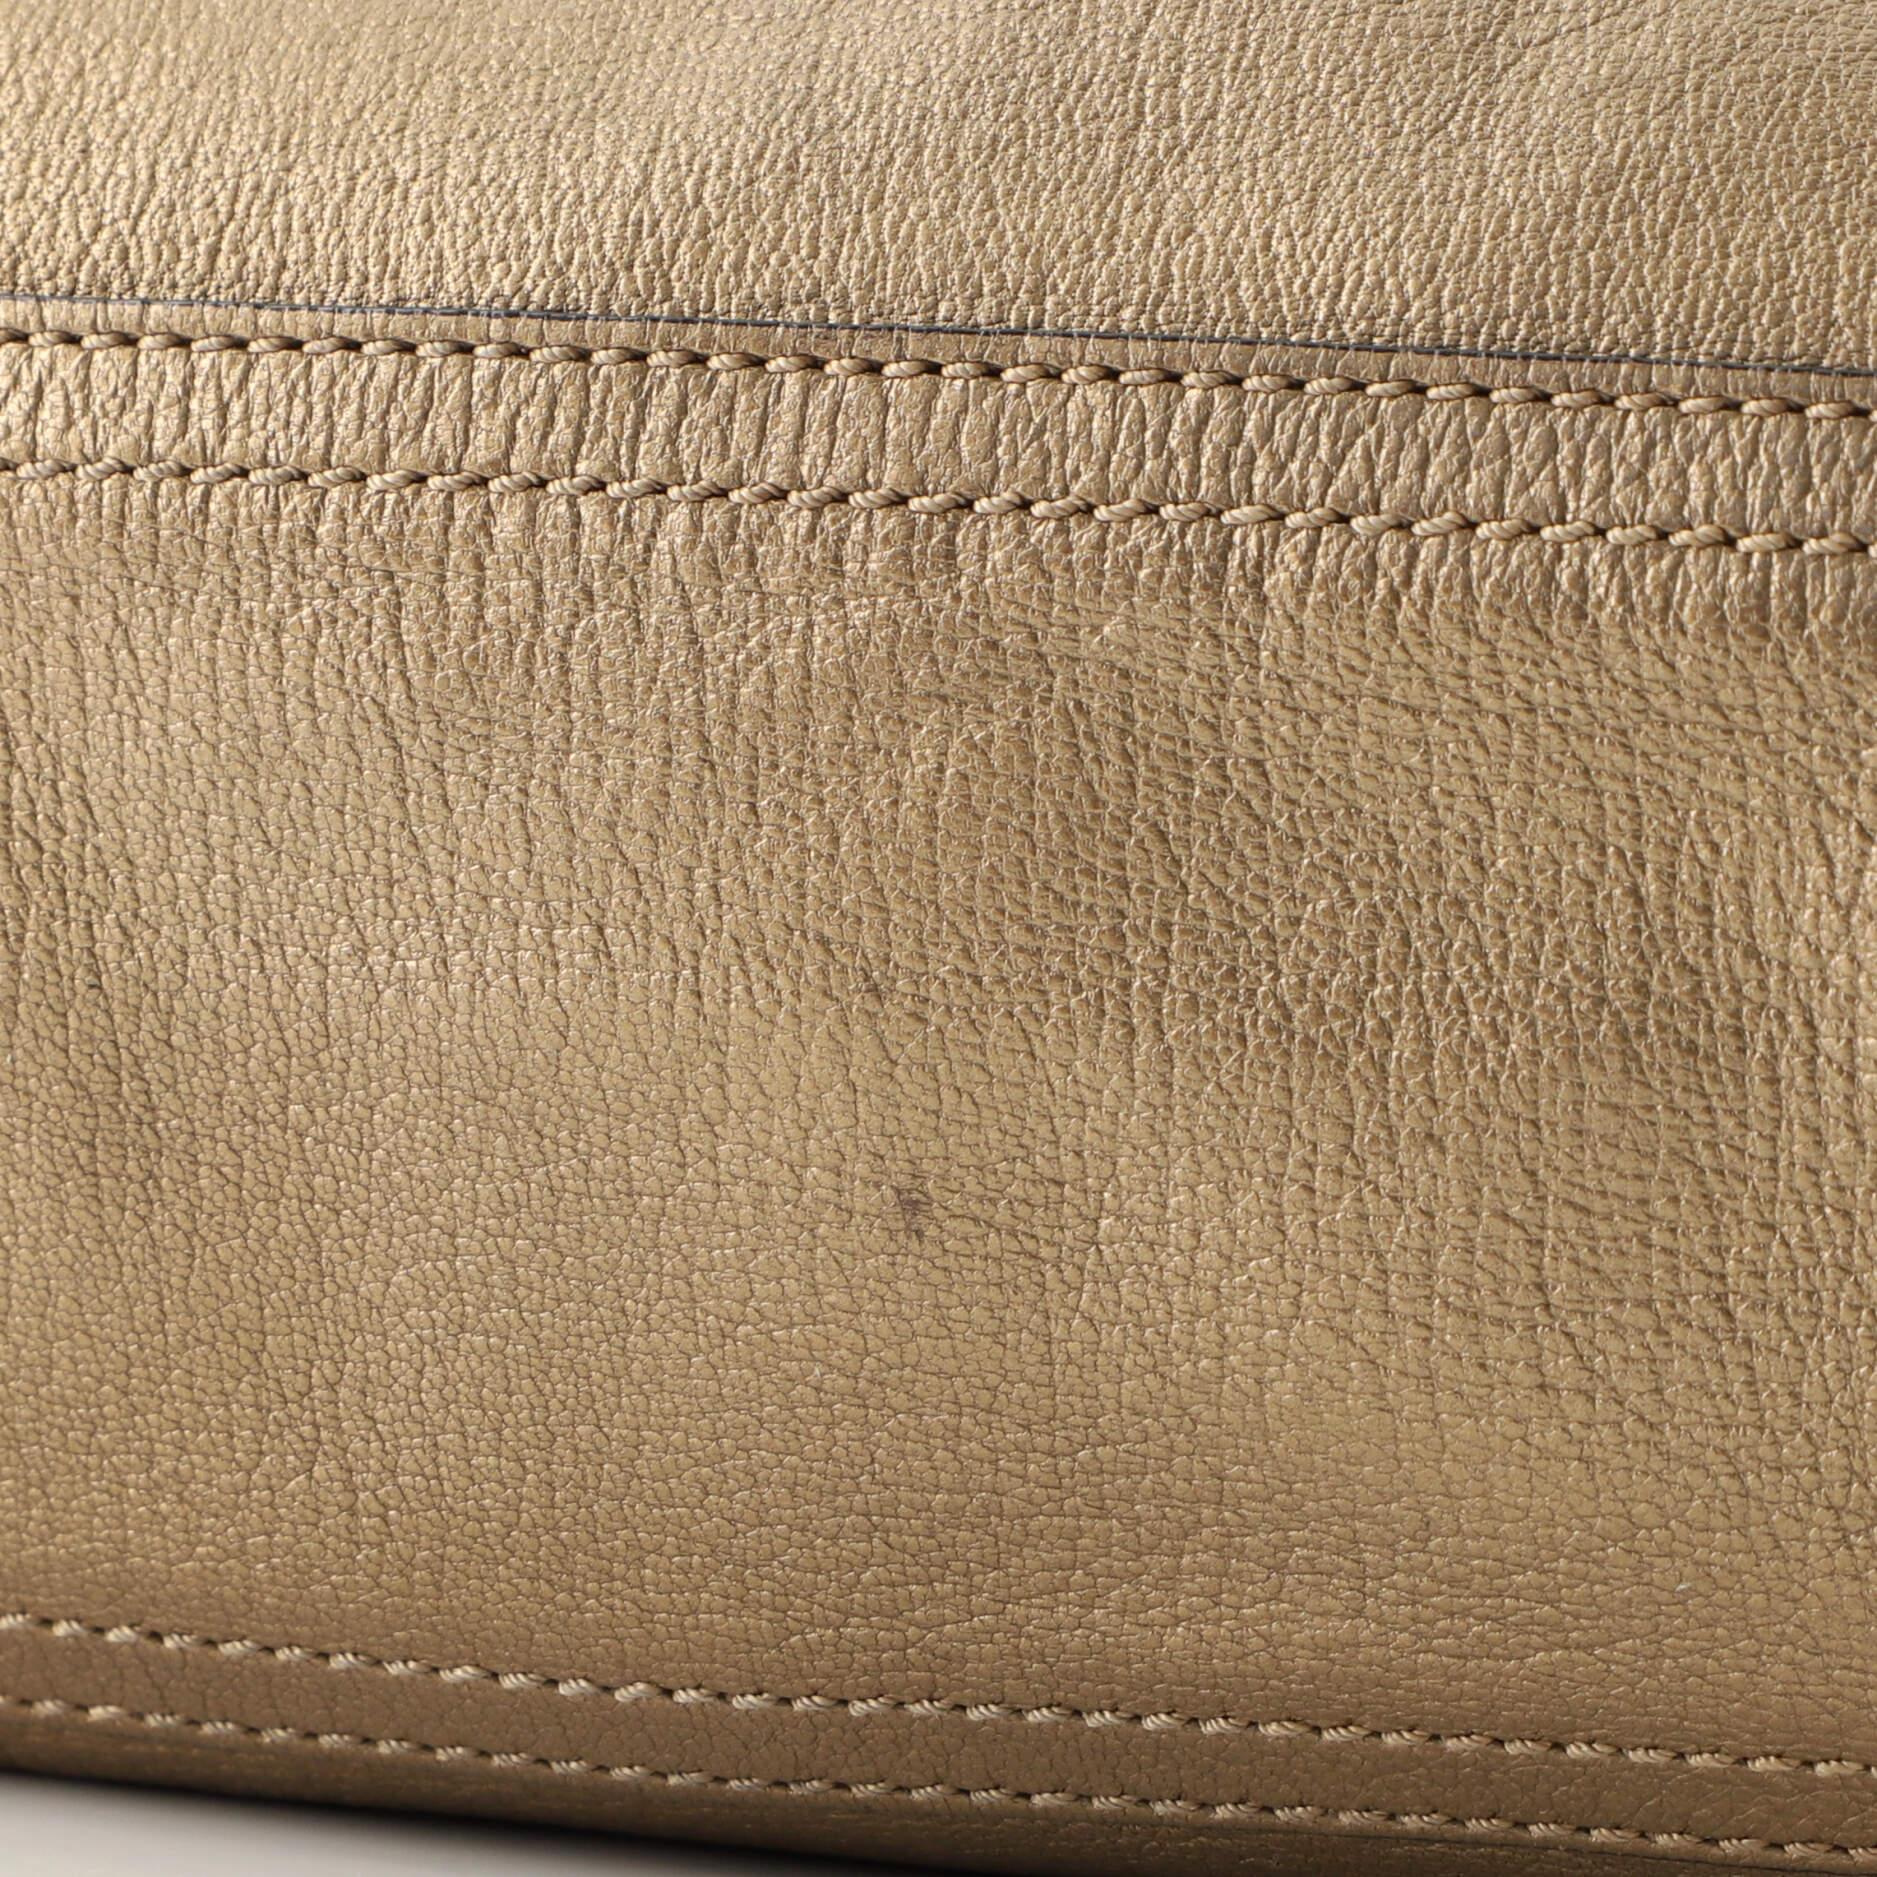 Givenchy Pandora Bag Leather Mini 2